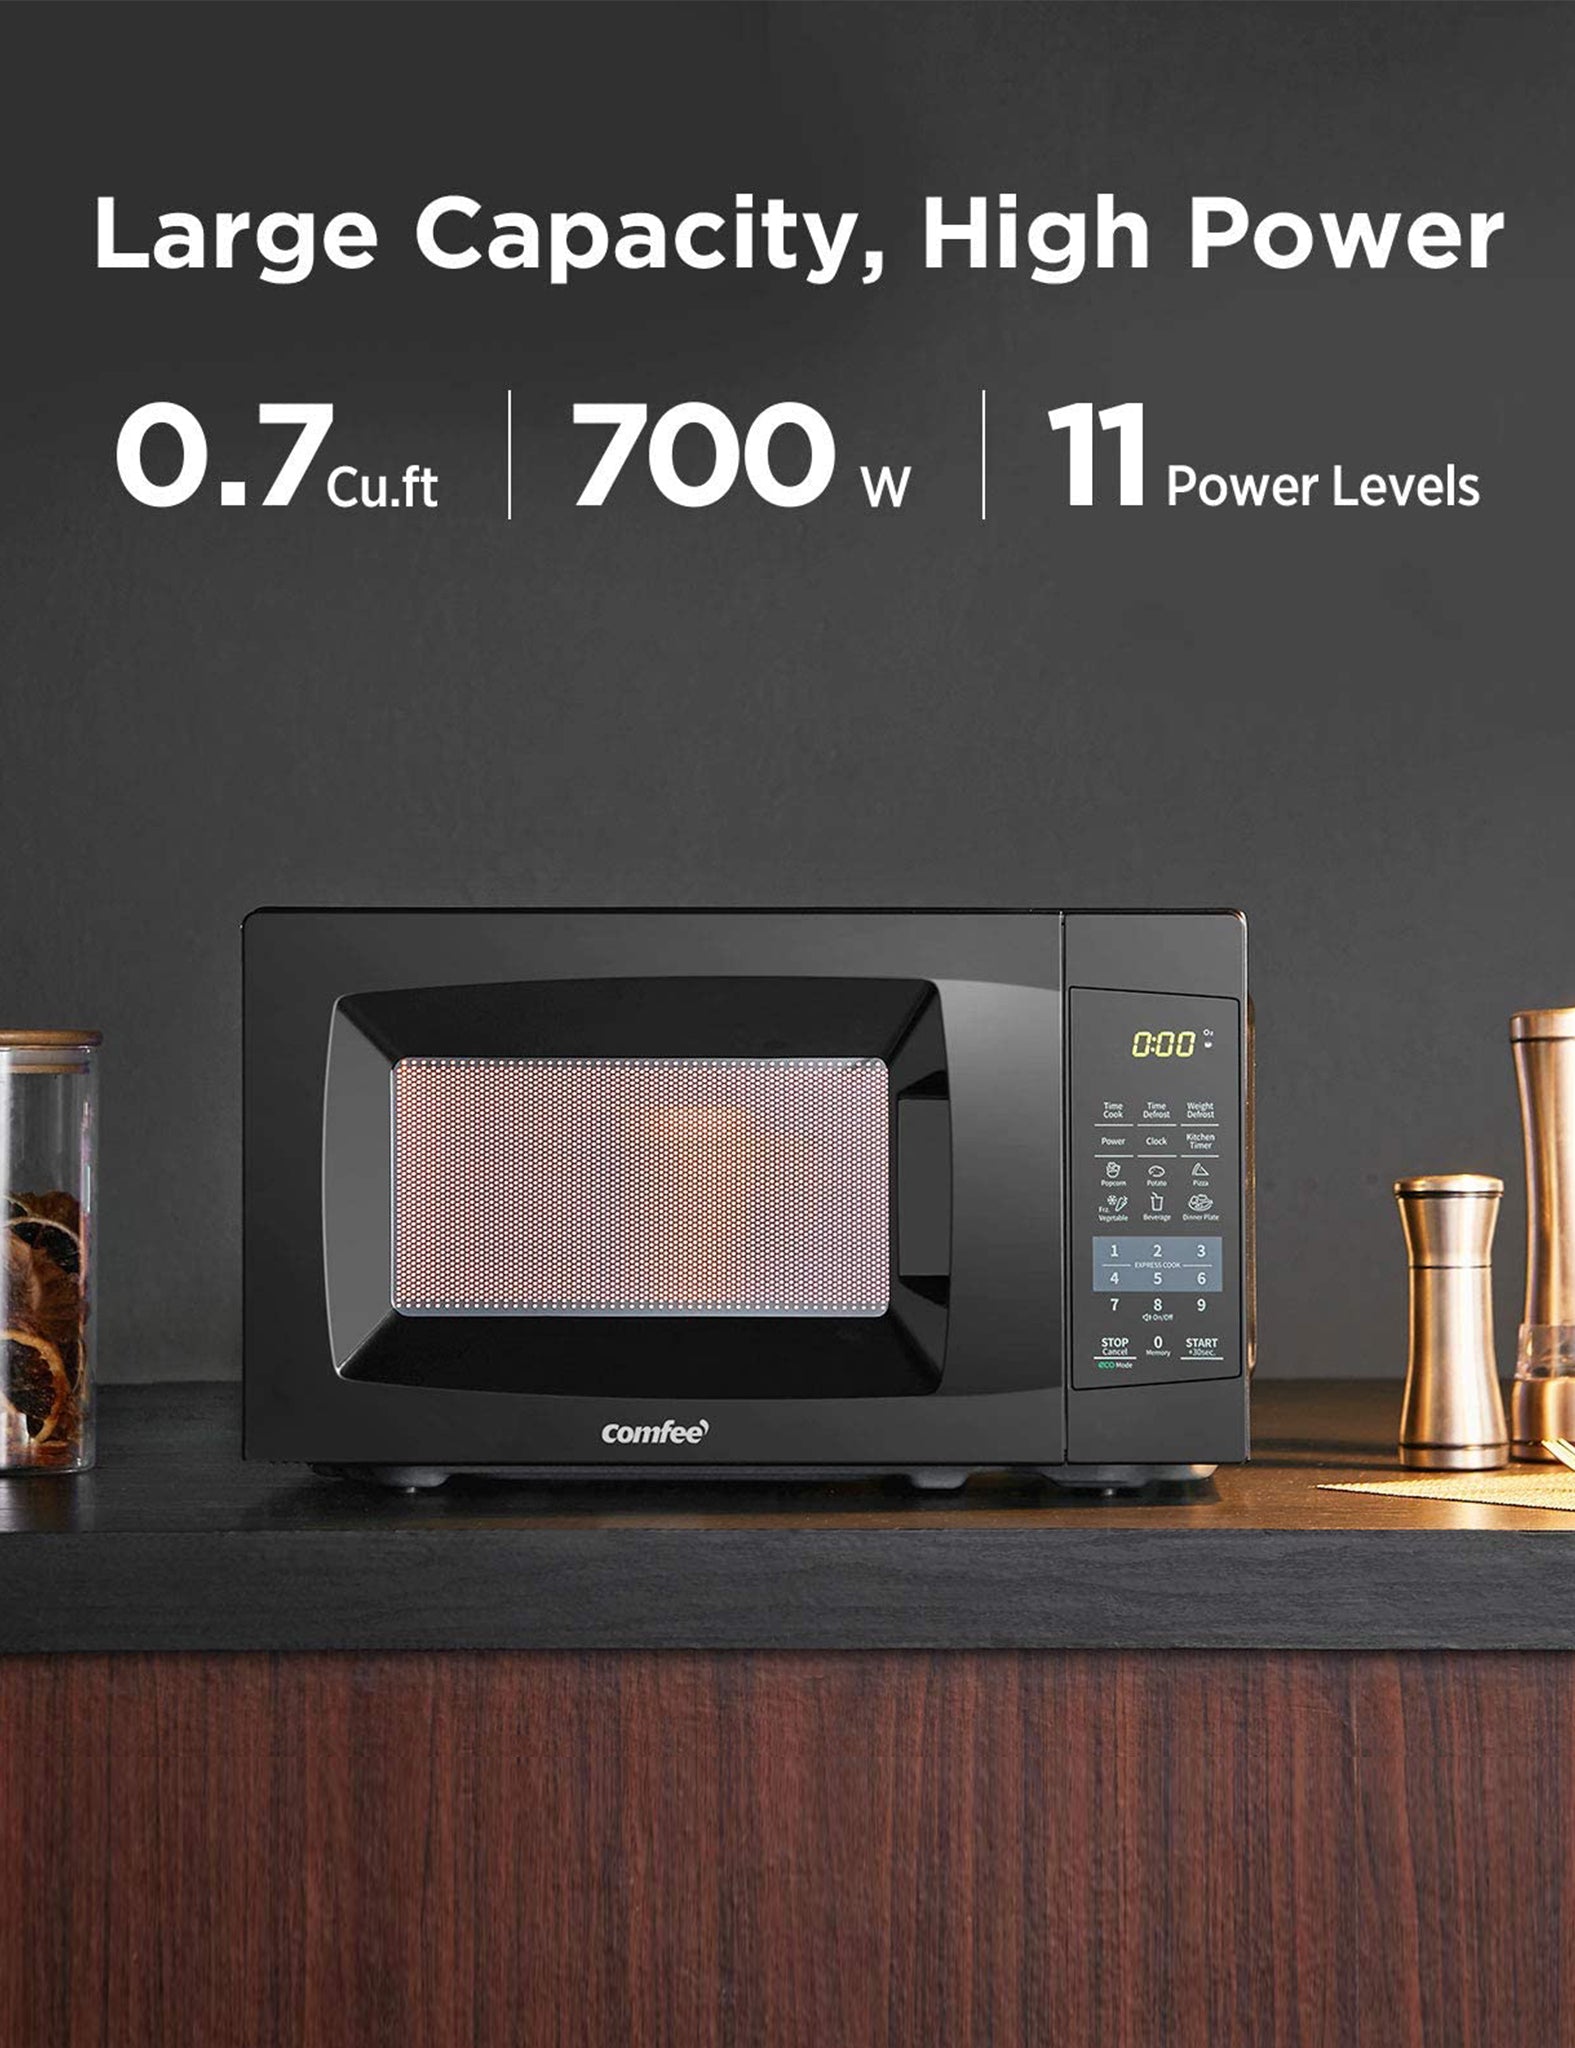 Comfee microwave, 0.7cu.ft, 700W, black - appliances - by owner - sale -  craigslist